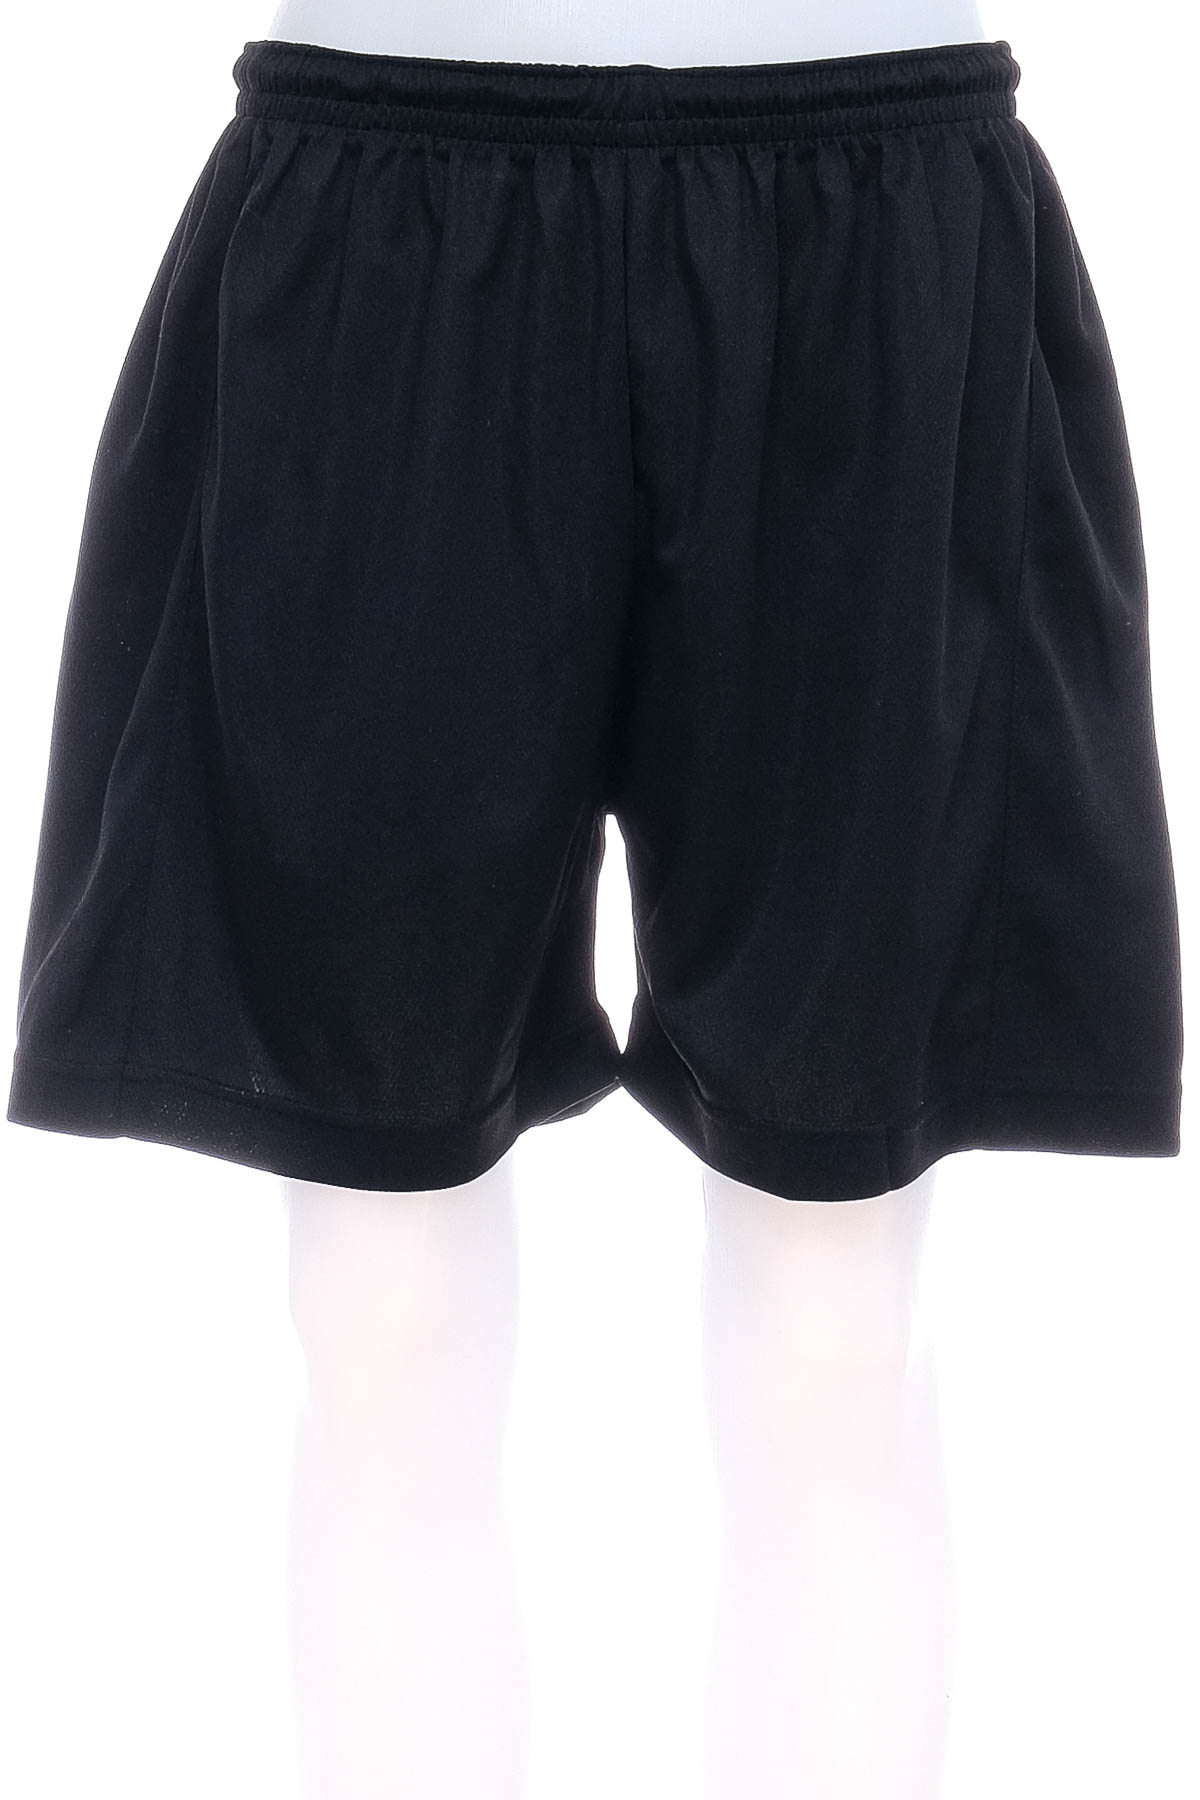 Men's shorts - 0